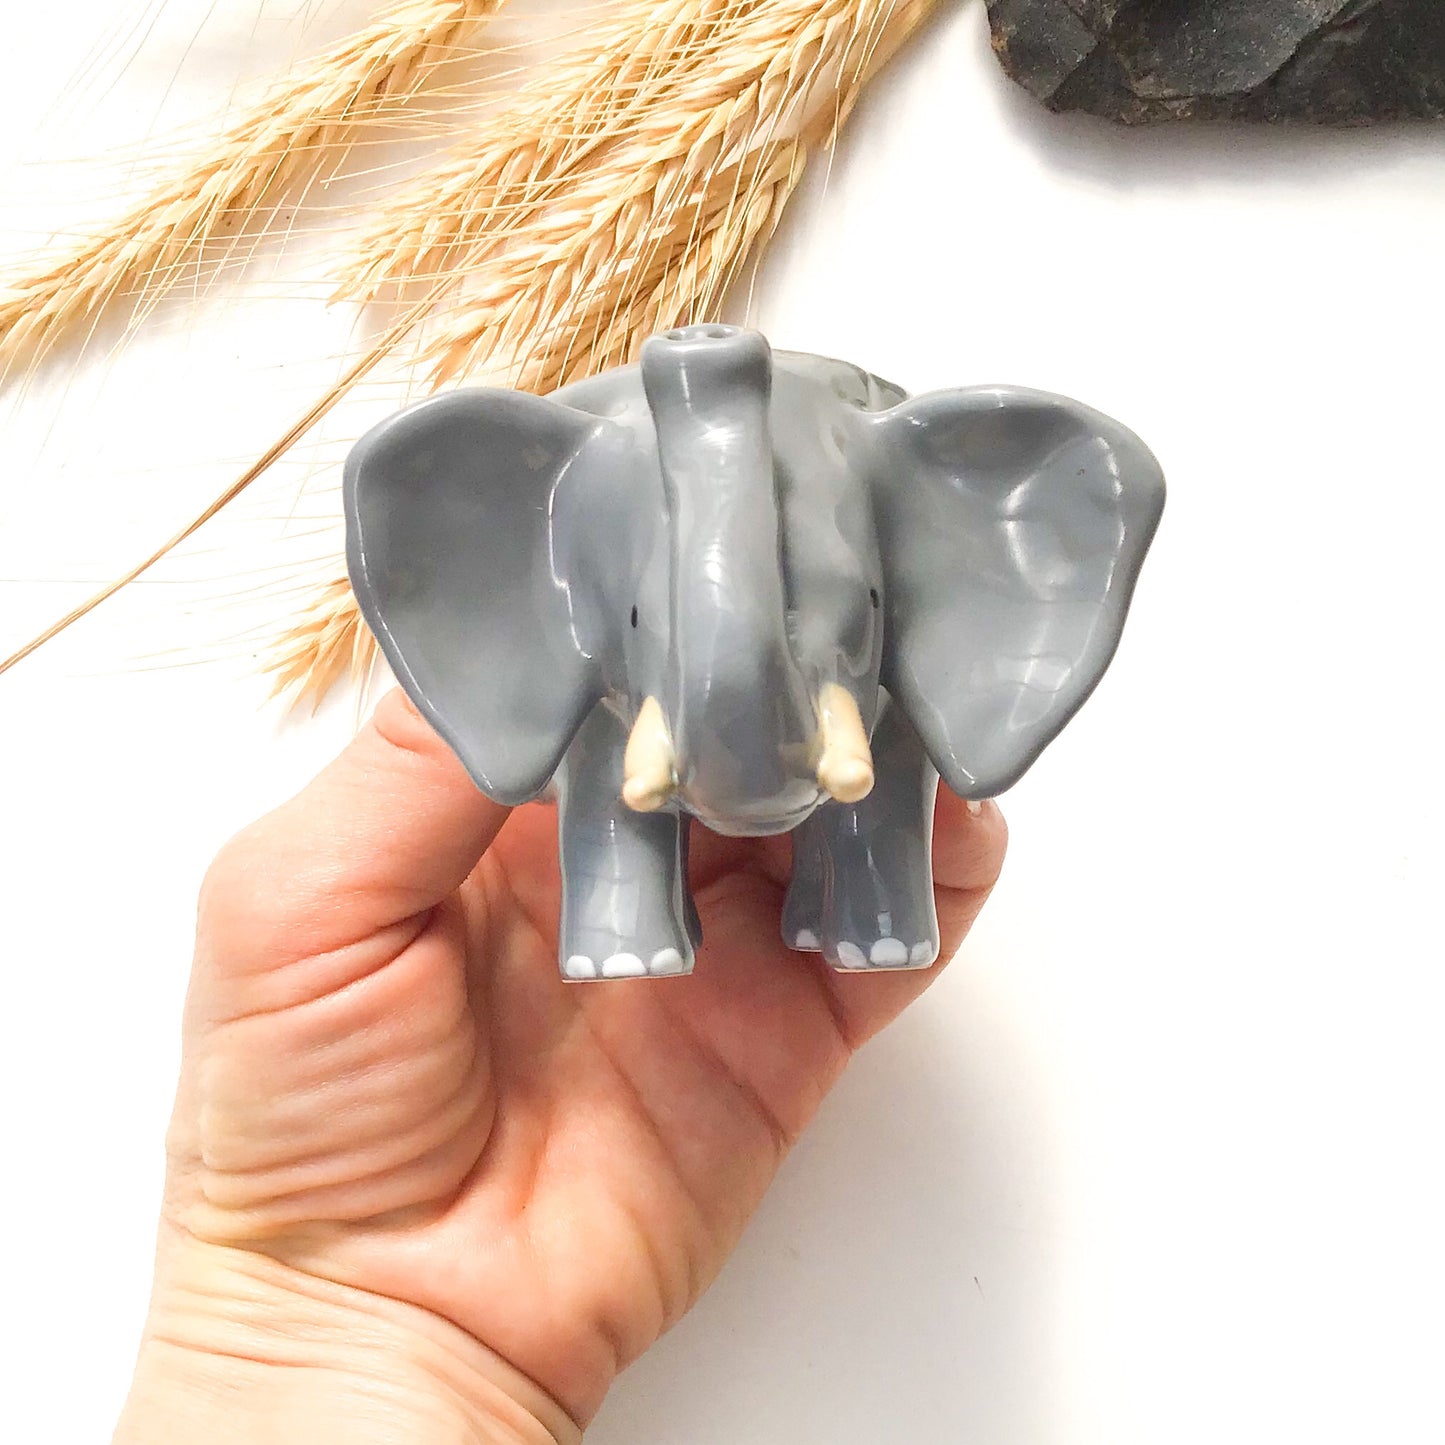 African Elephant Planter - Elephant Succulent Pot